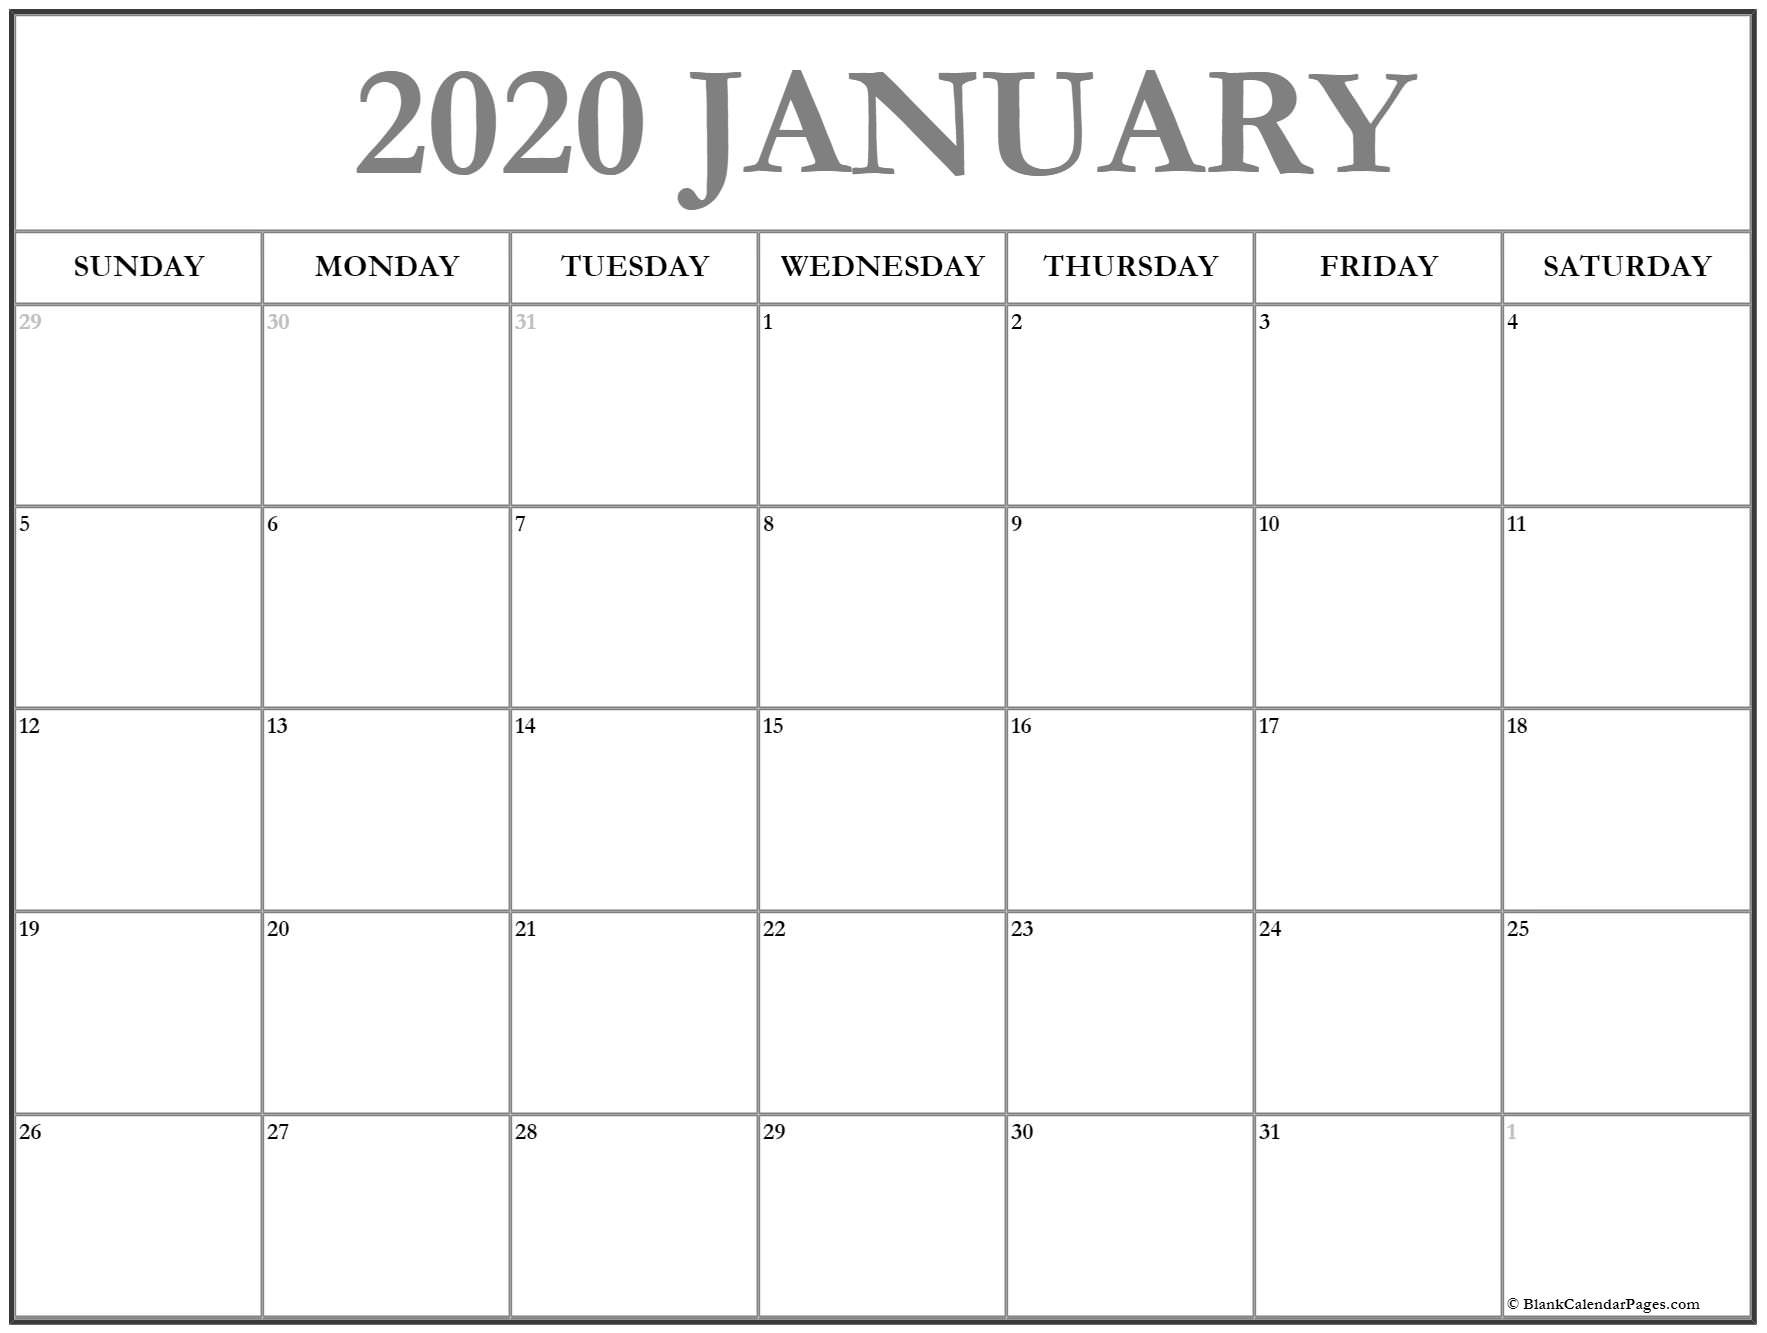 January 2020 Calendar | Free Printable Monthly Calendars-Free Bills Pay Calendar 2020 Printable Monthly